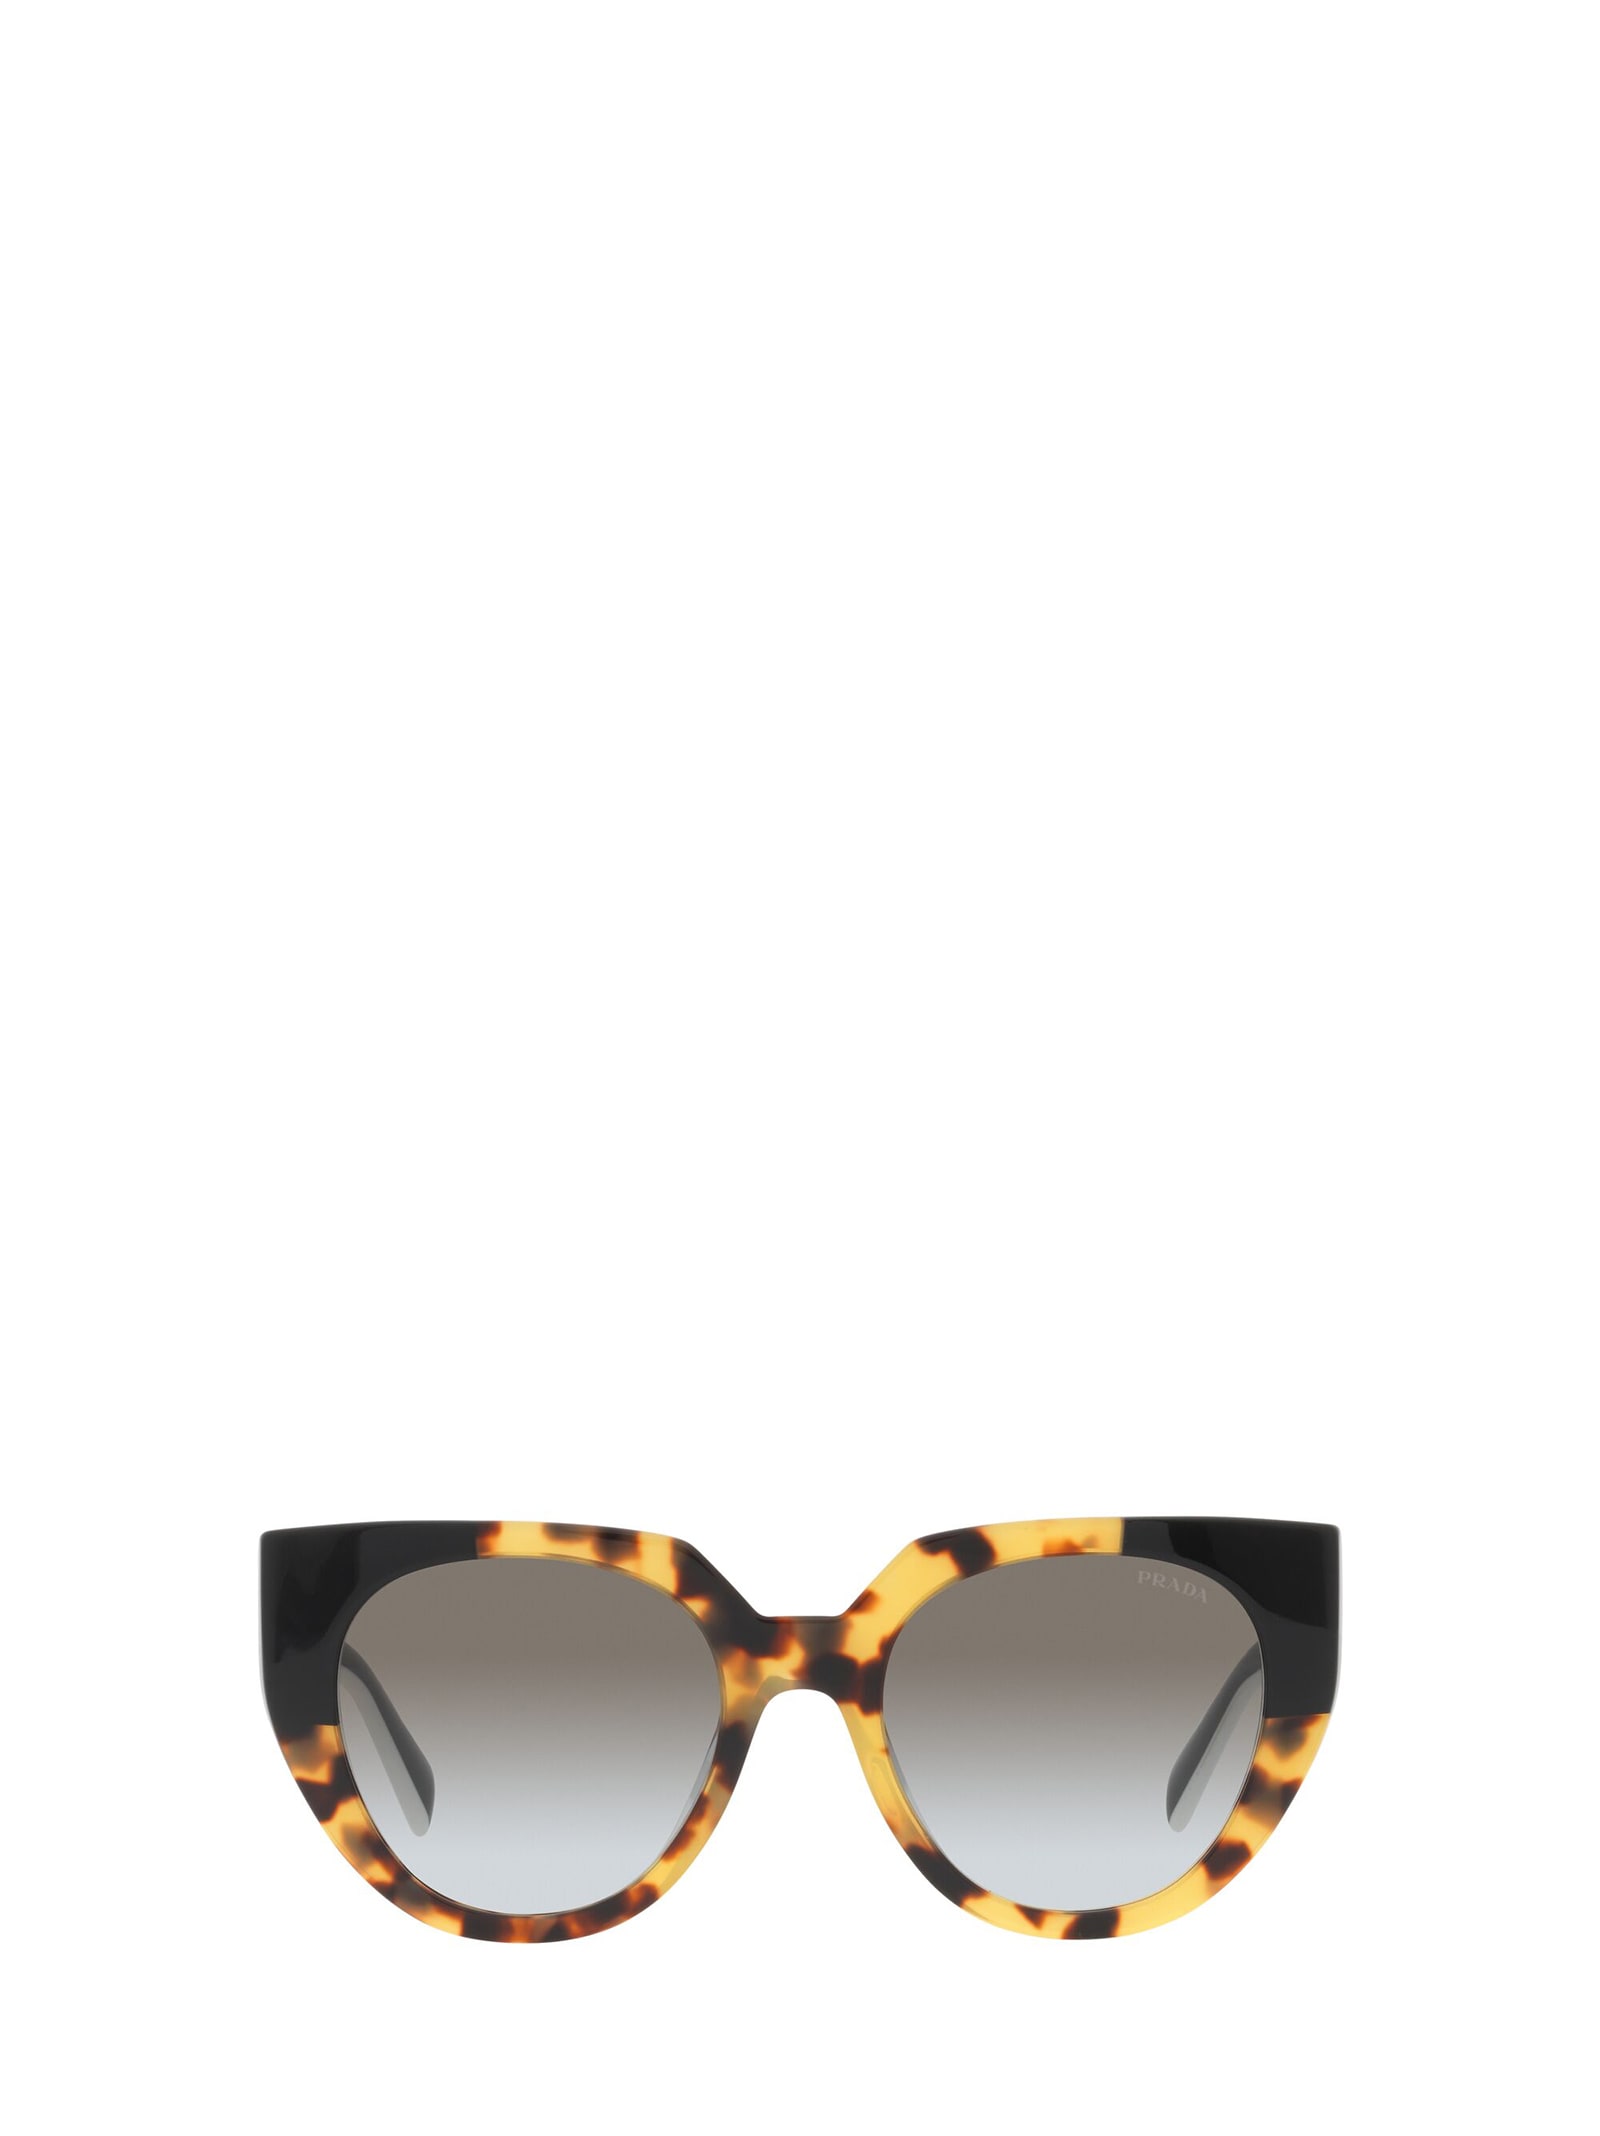 Prada Pr 14ws Medium Tortoise / Black Sunglasses In Grey | ModeSens